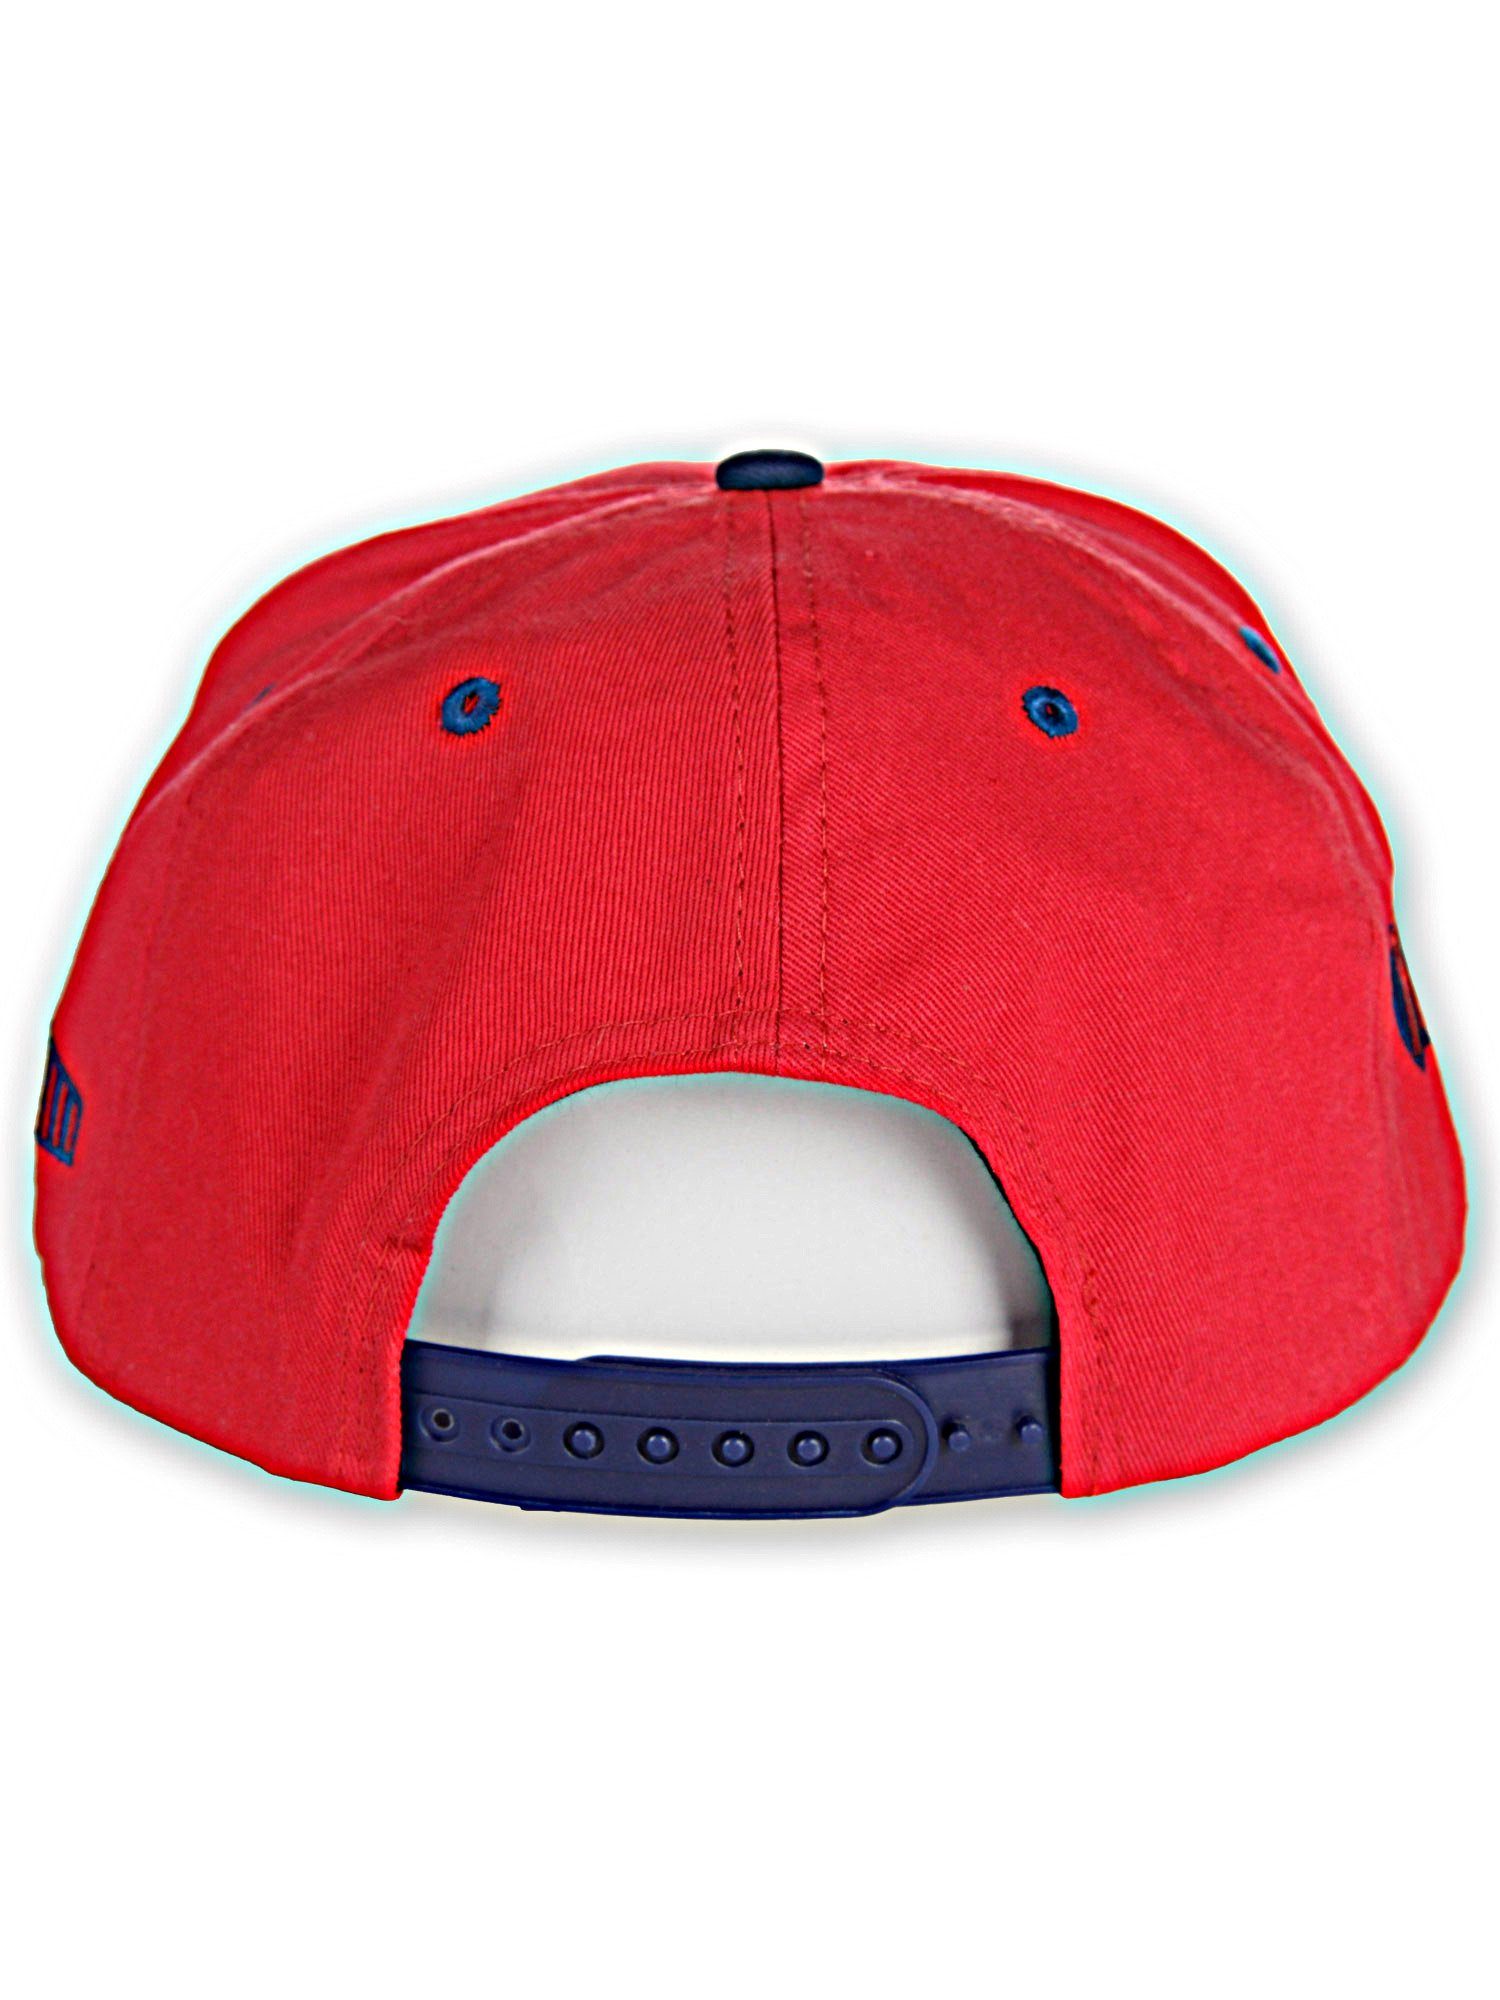 Bootle Schirm mit Baseball dunkelblau-rot Cap RedBridge kontrastfarbigem